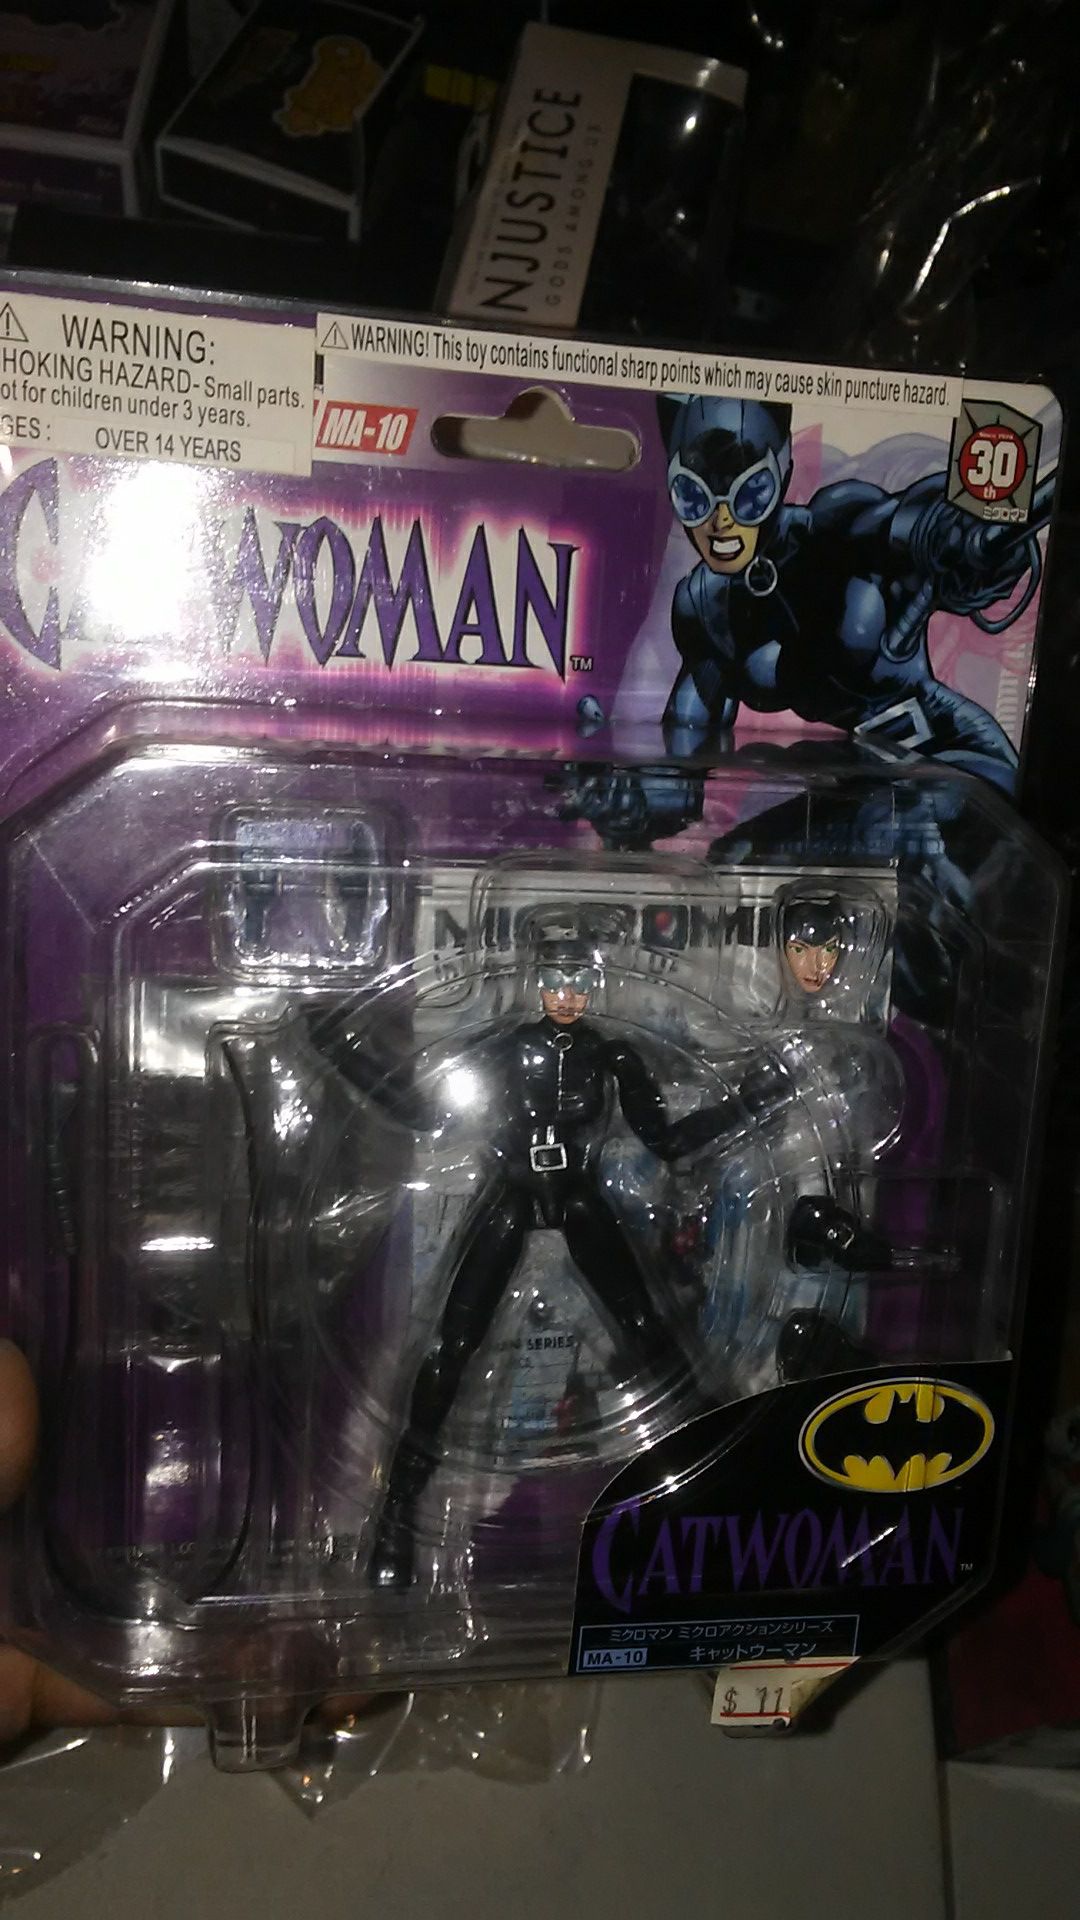 Batman catwoman microman action series MA-10 mini figure